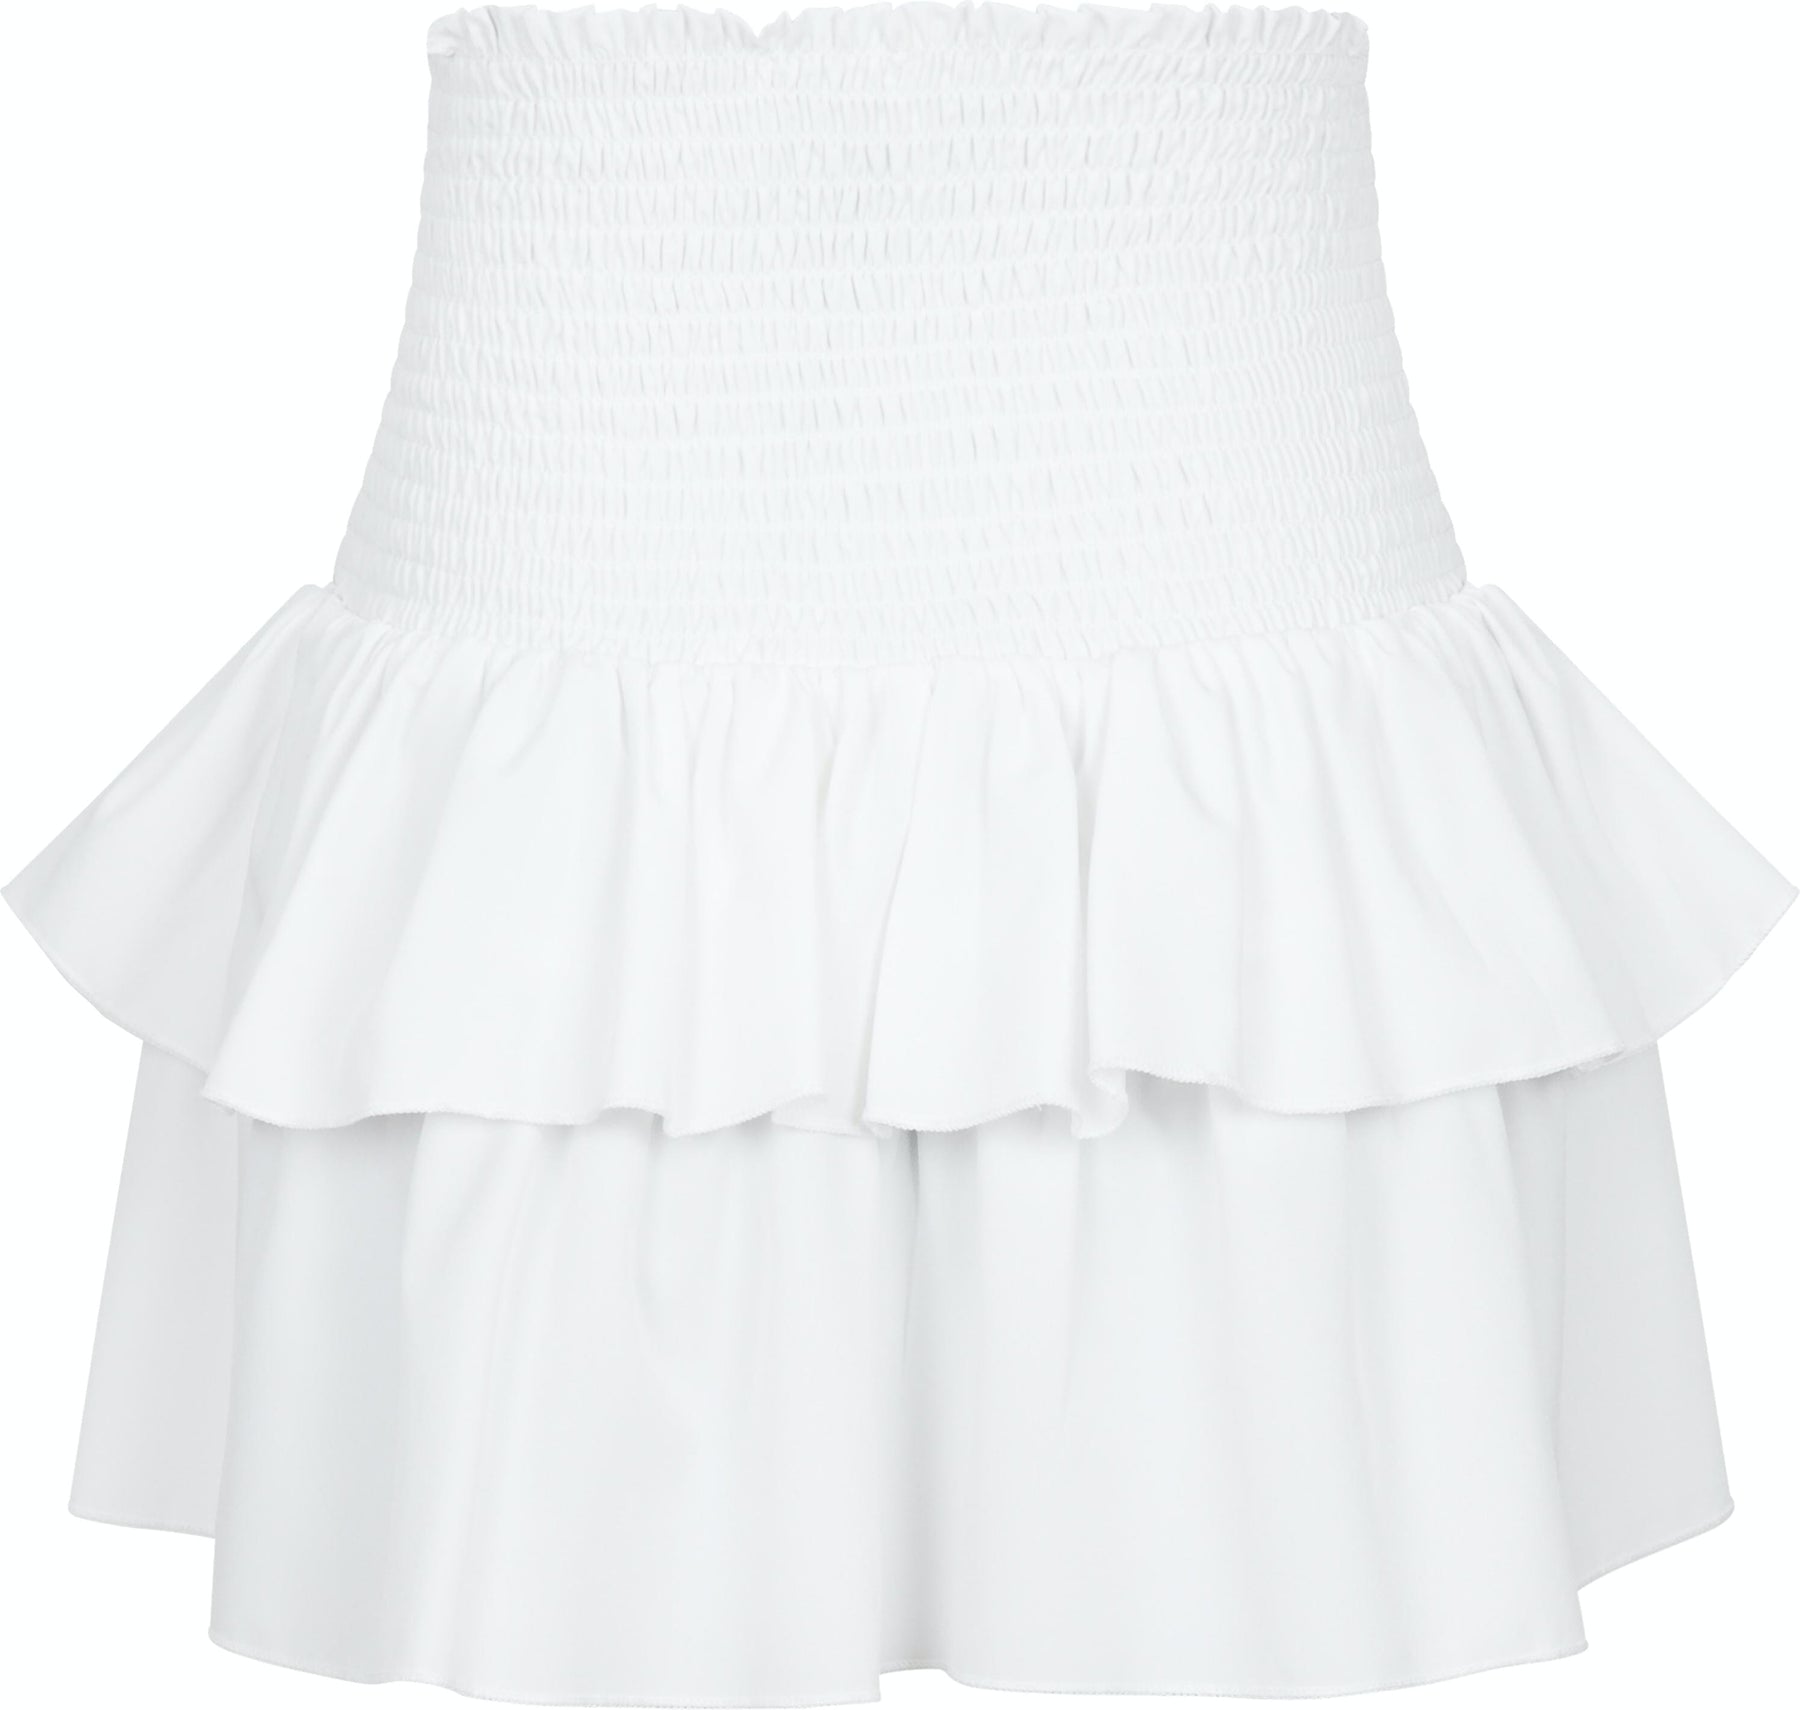 Neo | Carin R Skirt - White » Shop hos Molly&My